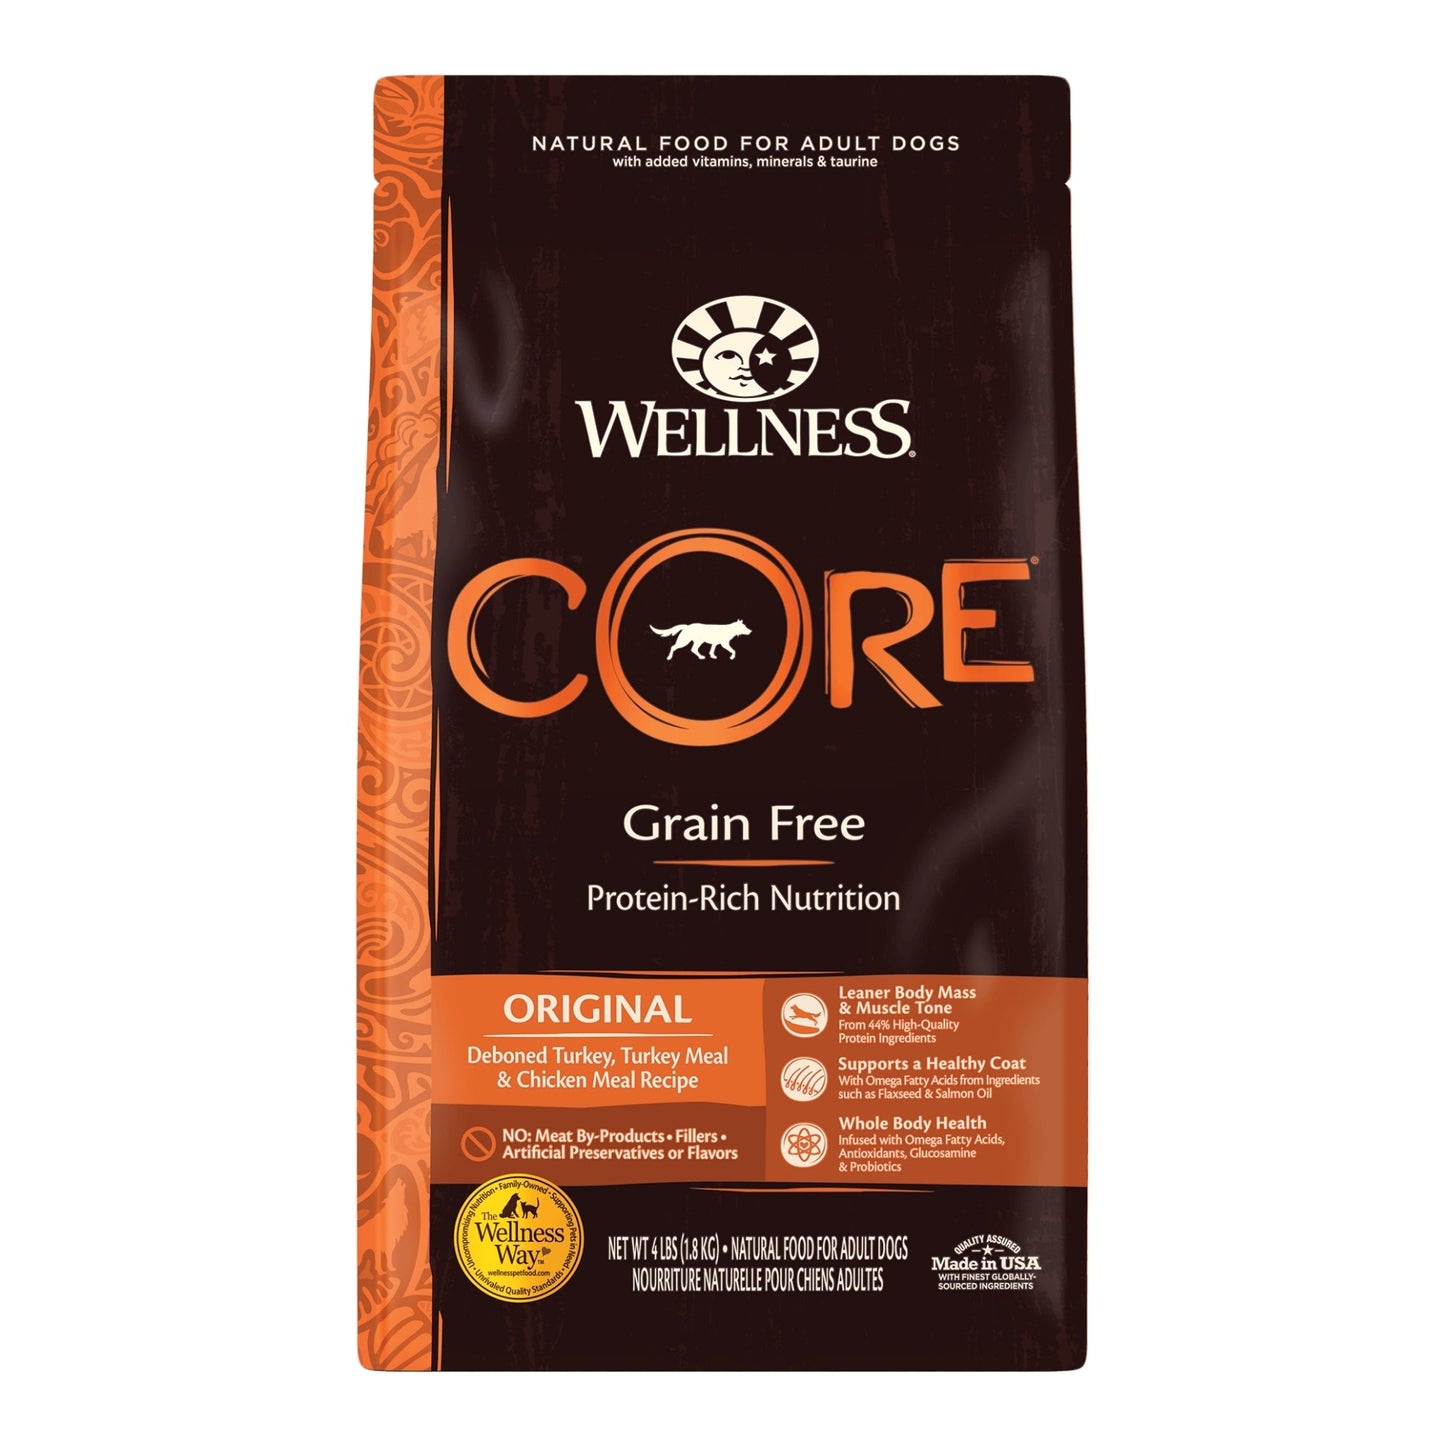 Wellness Dog Core Original 4Lb Grain Free